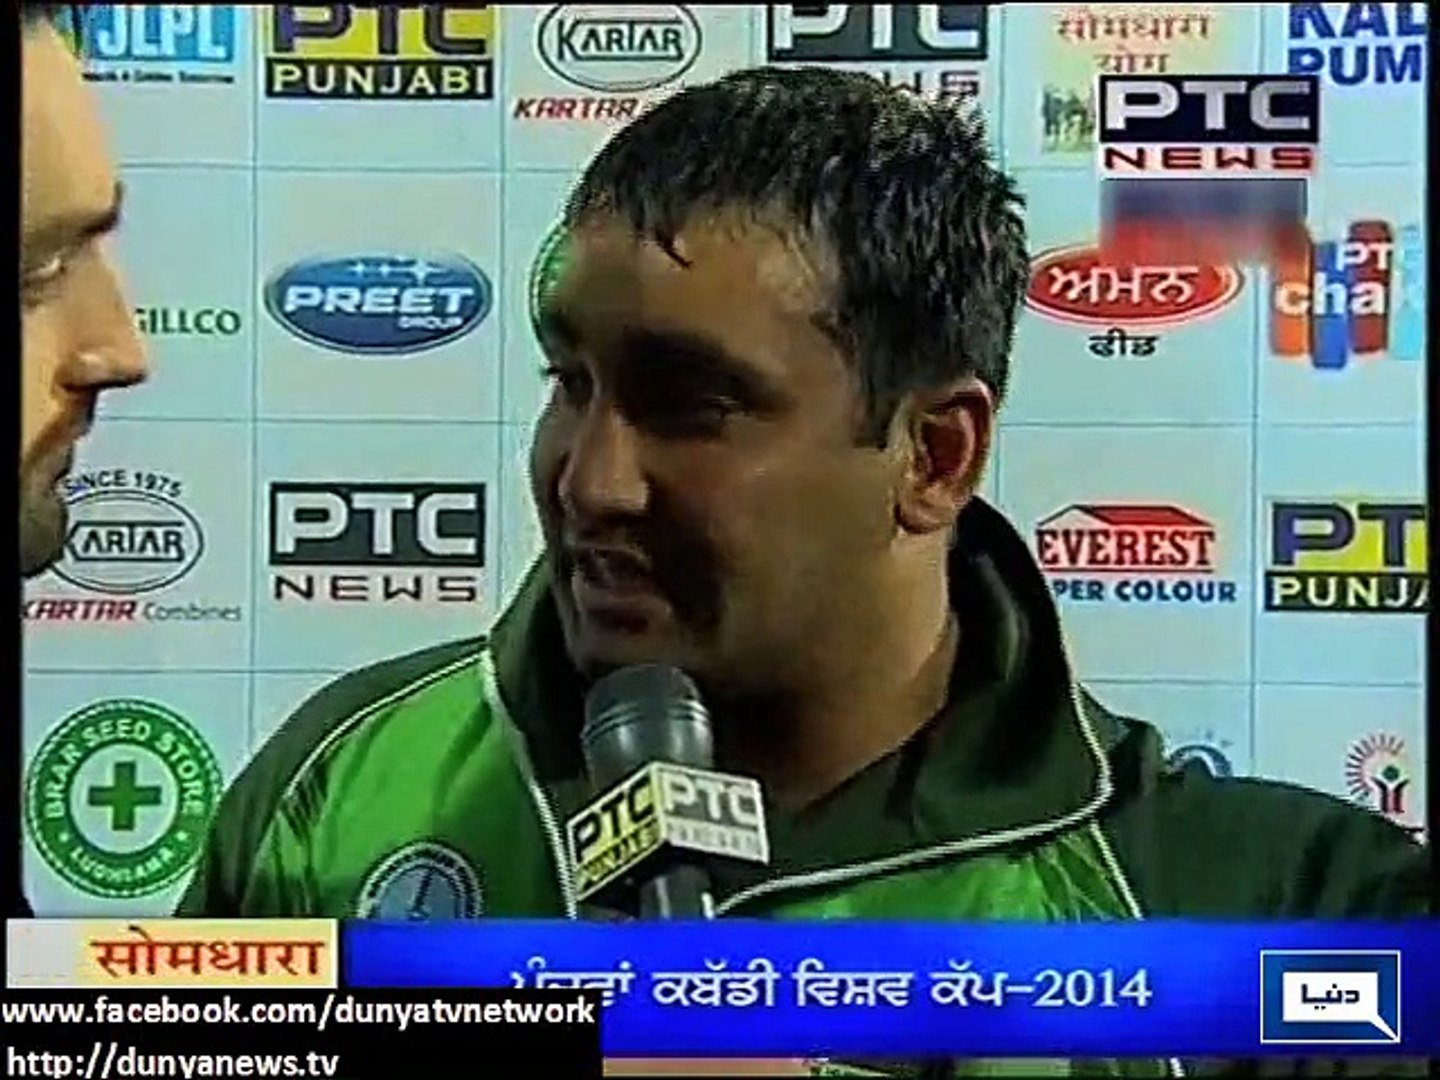 Dunya News - India defeated Pakistan in Kabaddi final amid 'rigging' allegations